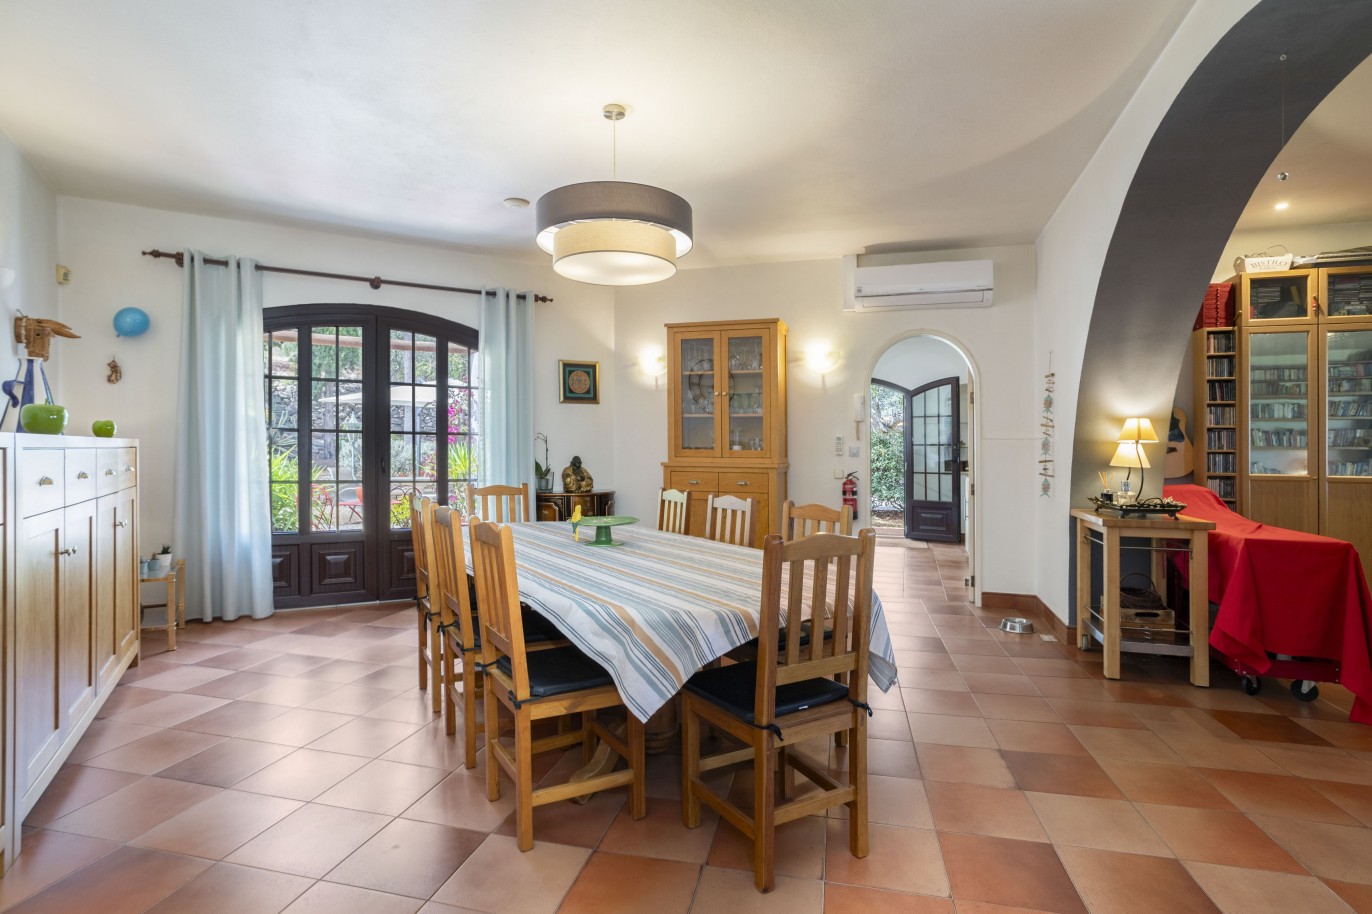 7 Bed Country Villa with swimming pool for sale in Estoi, Algarve_230957